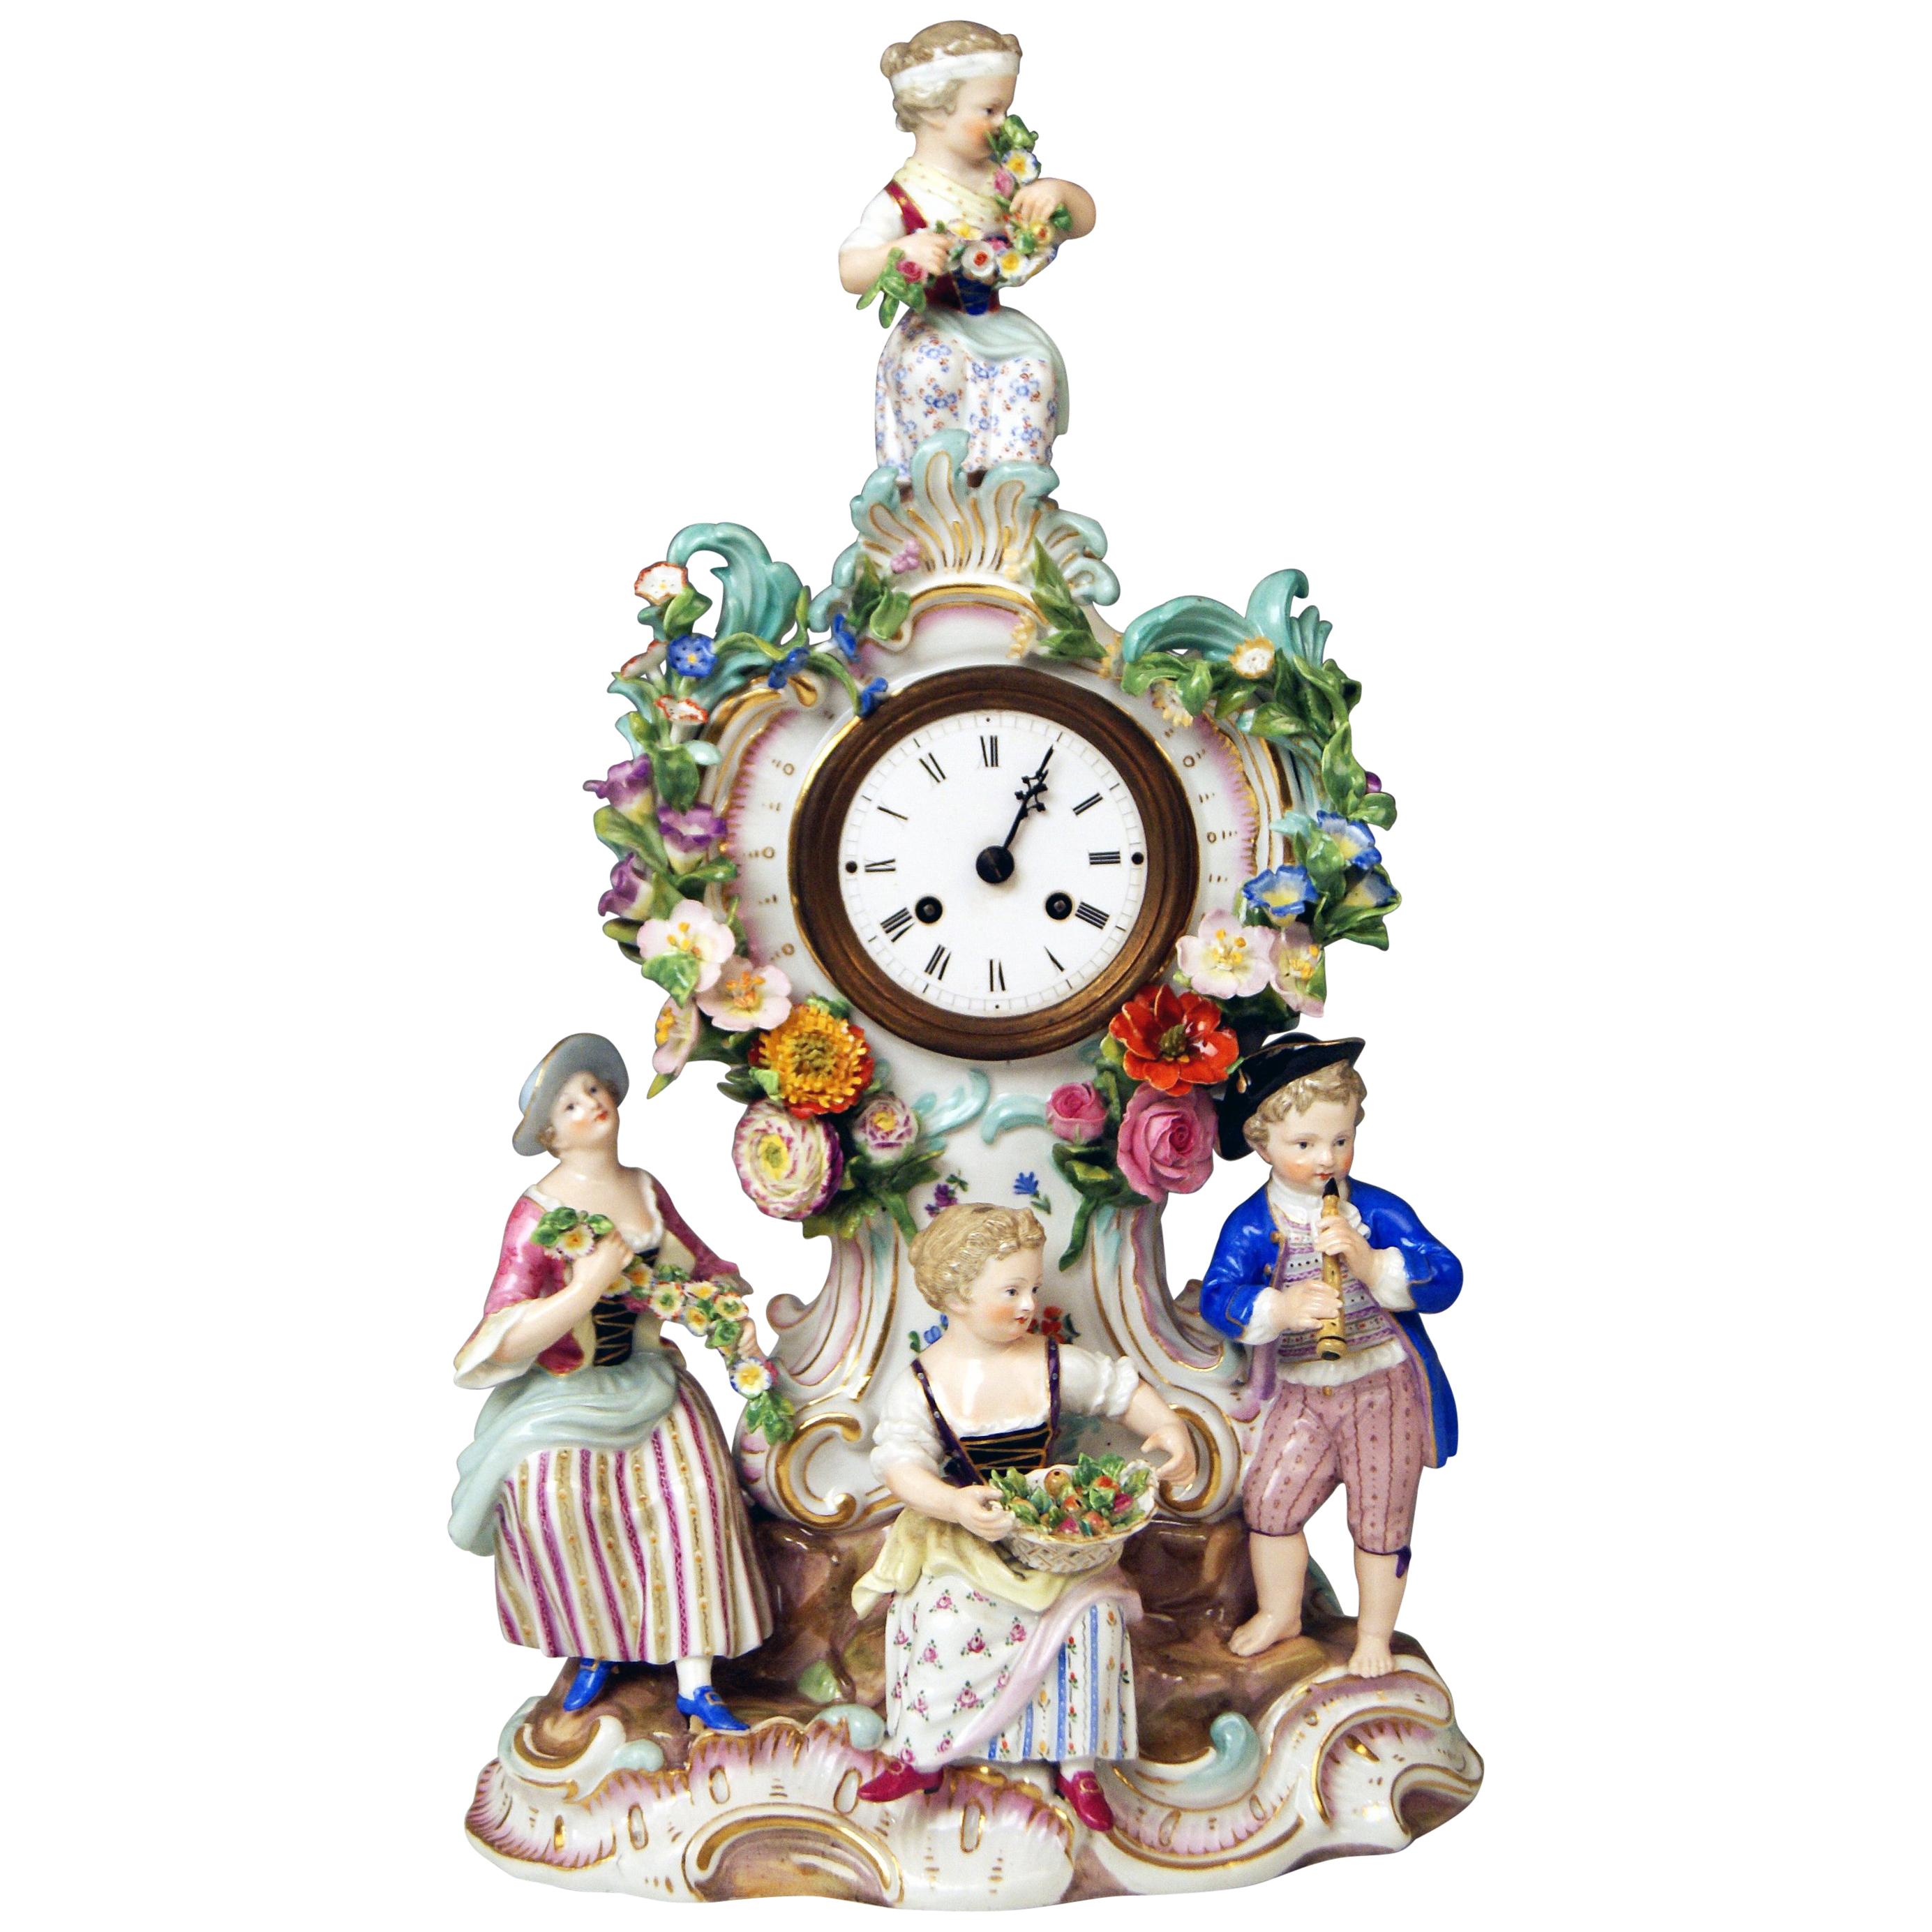 Meissen Mantle Table Clock Gardener Figurines Model 572 by Leuteritz, circa 1880